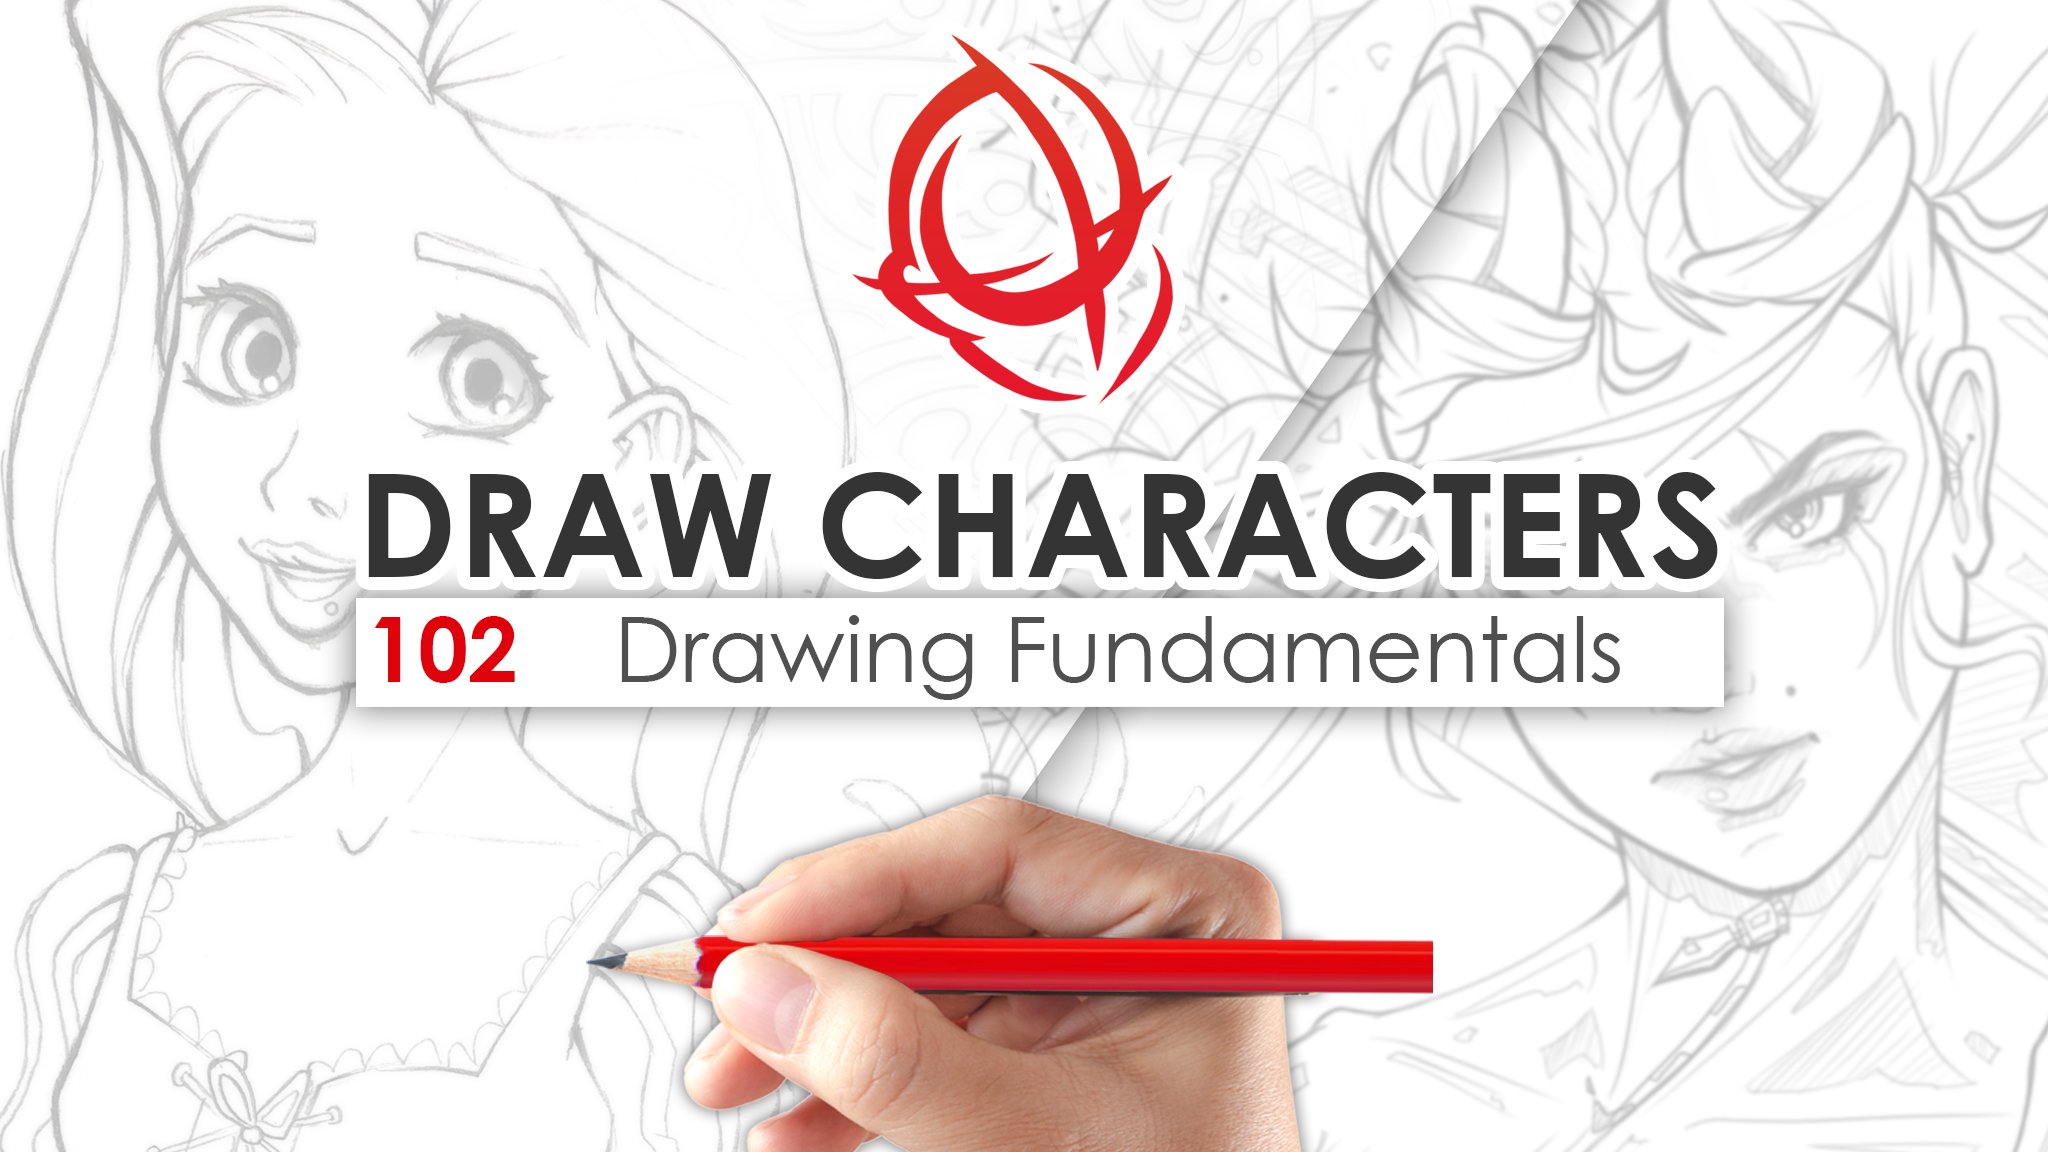 Draw characters drawing fundamentals scott harris